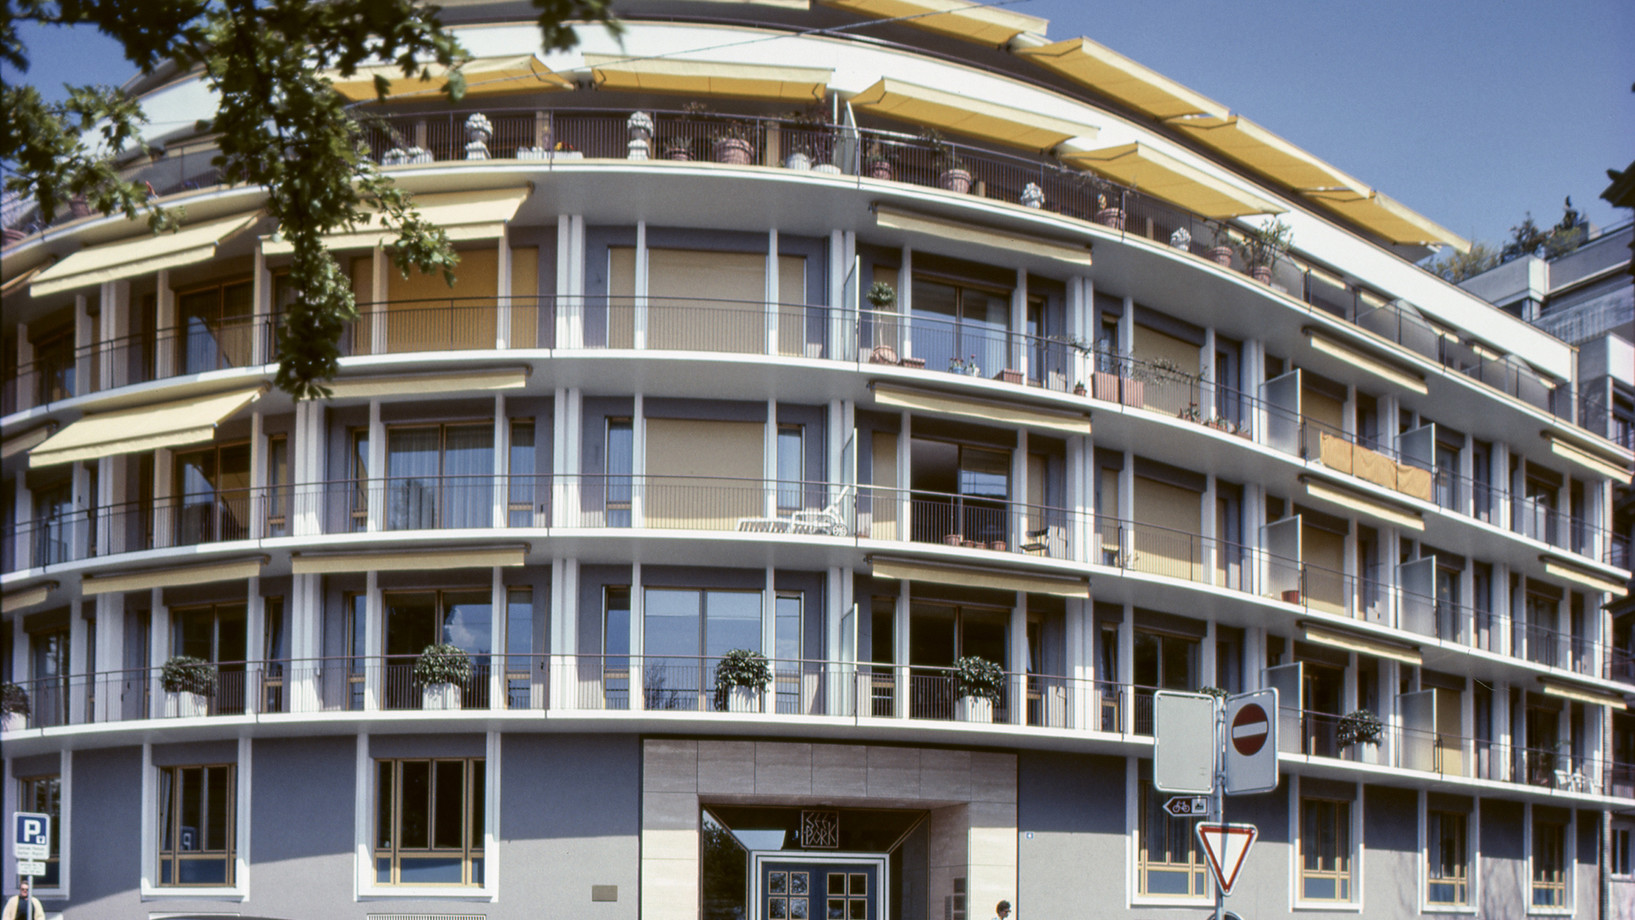 Appartementhaus Seepark, Zug 1955 (Foto: Alois Ottinger, 1997)